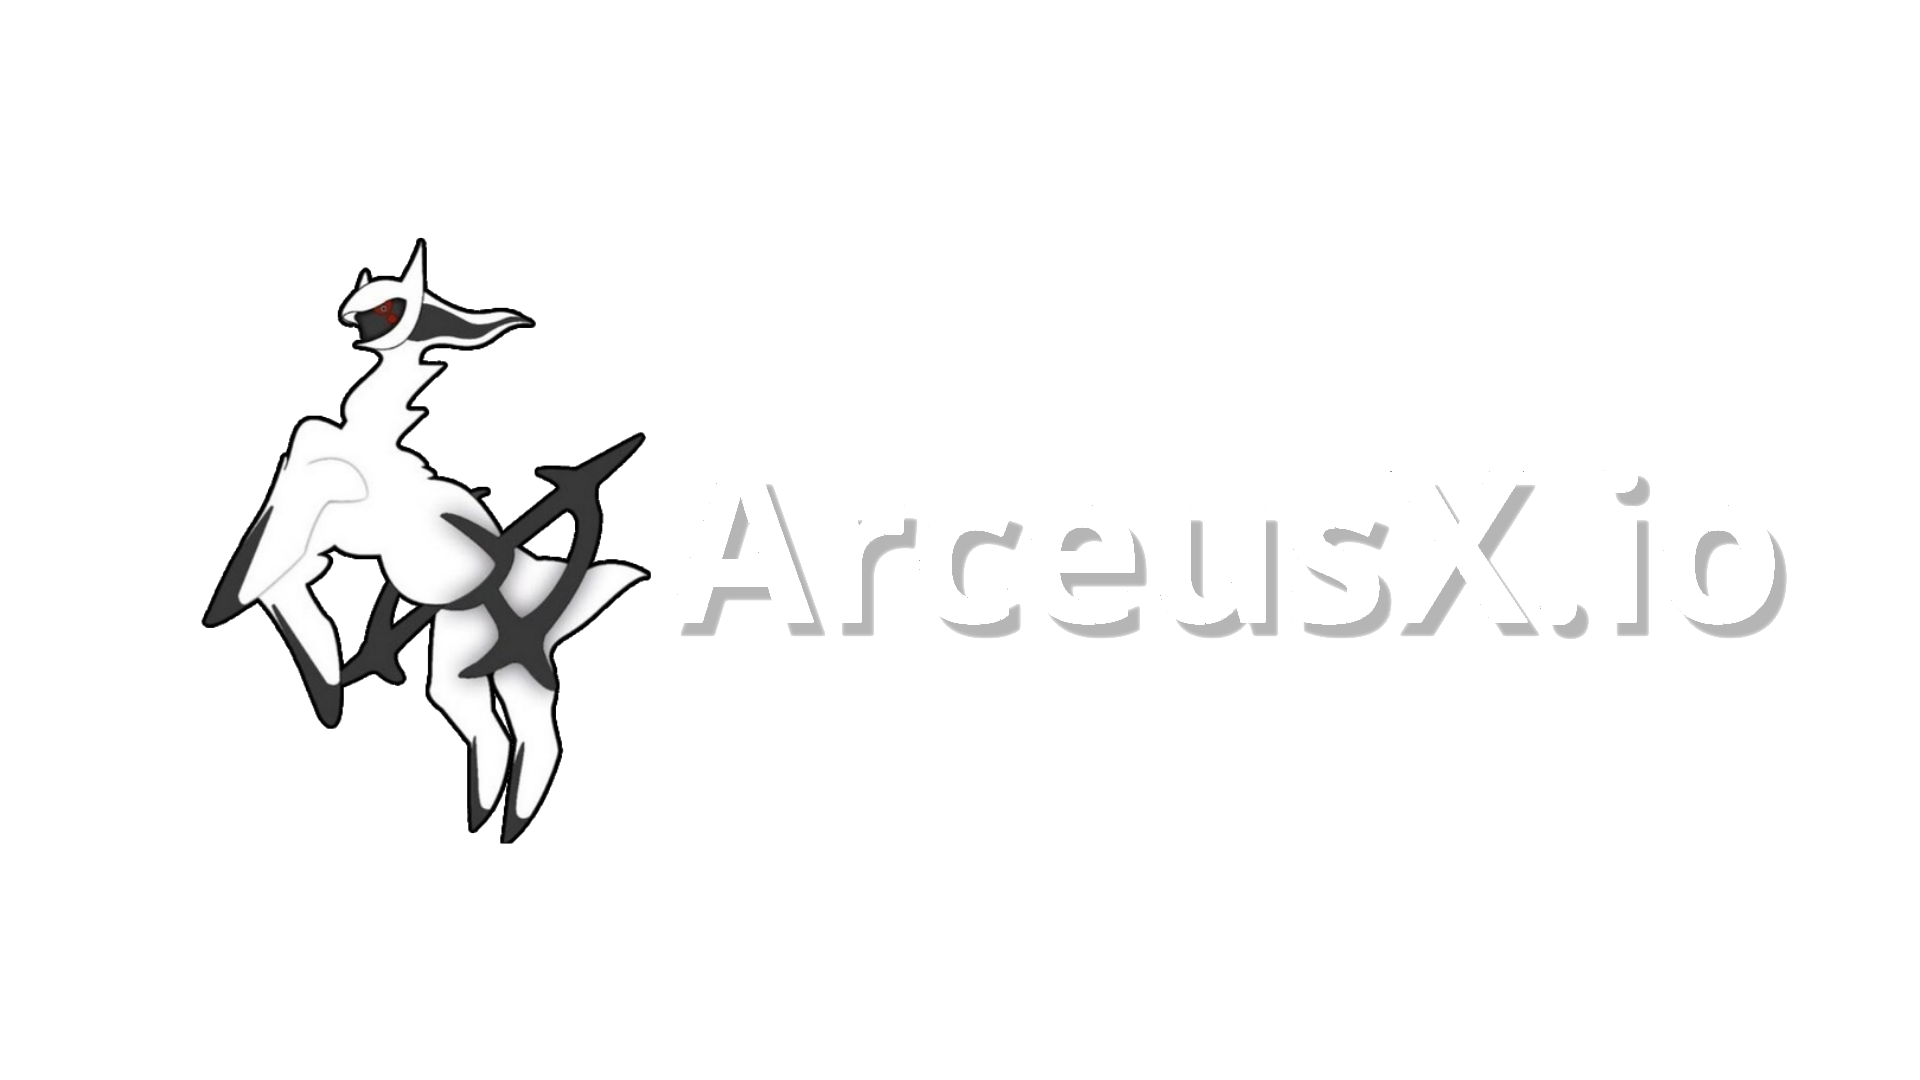 arceusxgaming (Arceus X) - Replit